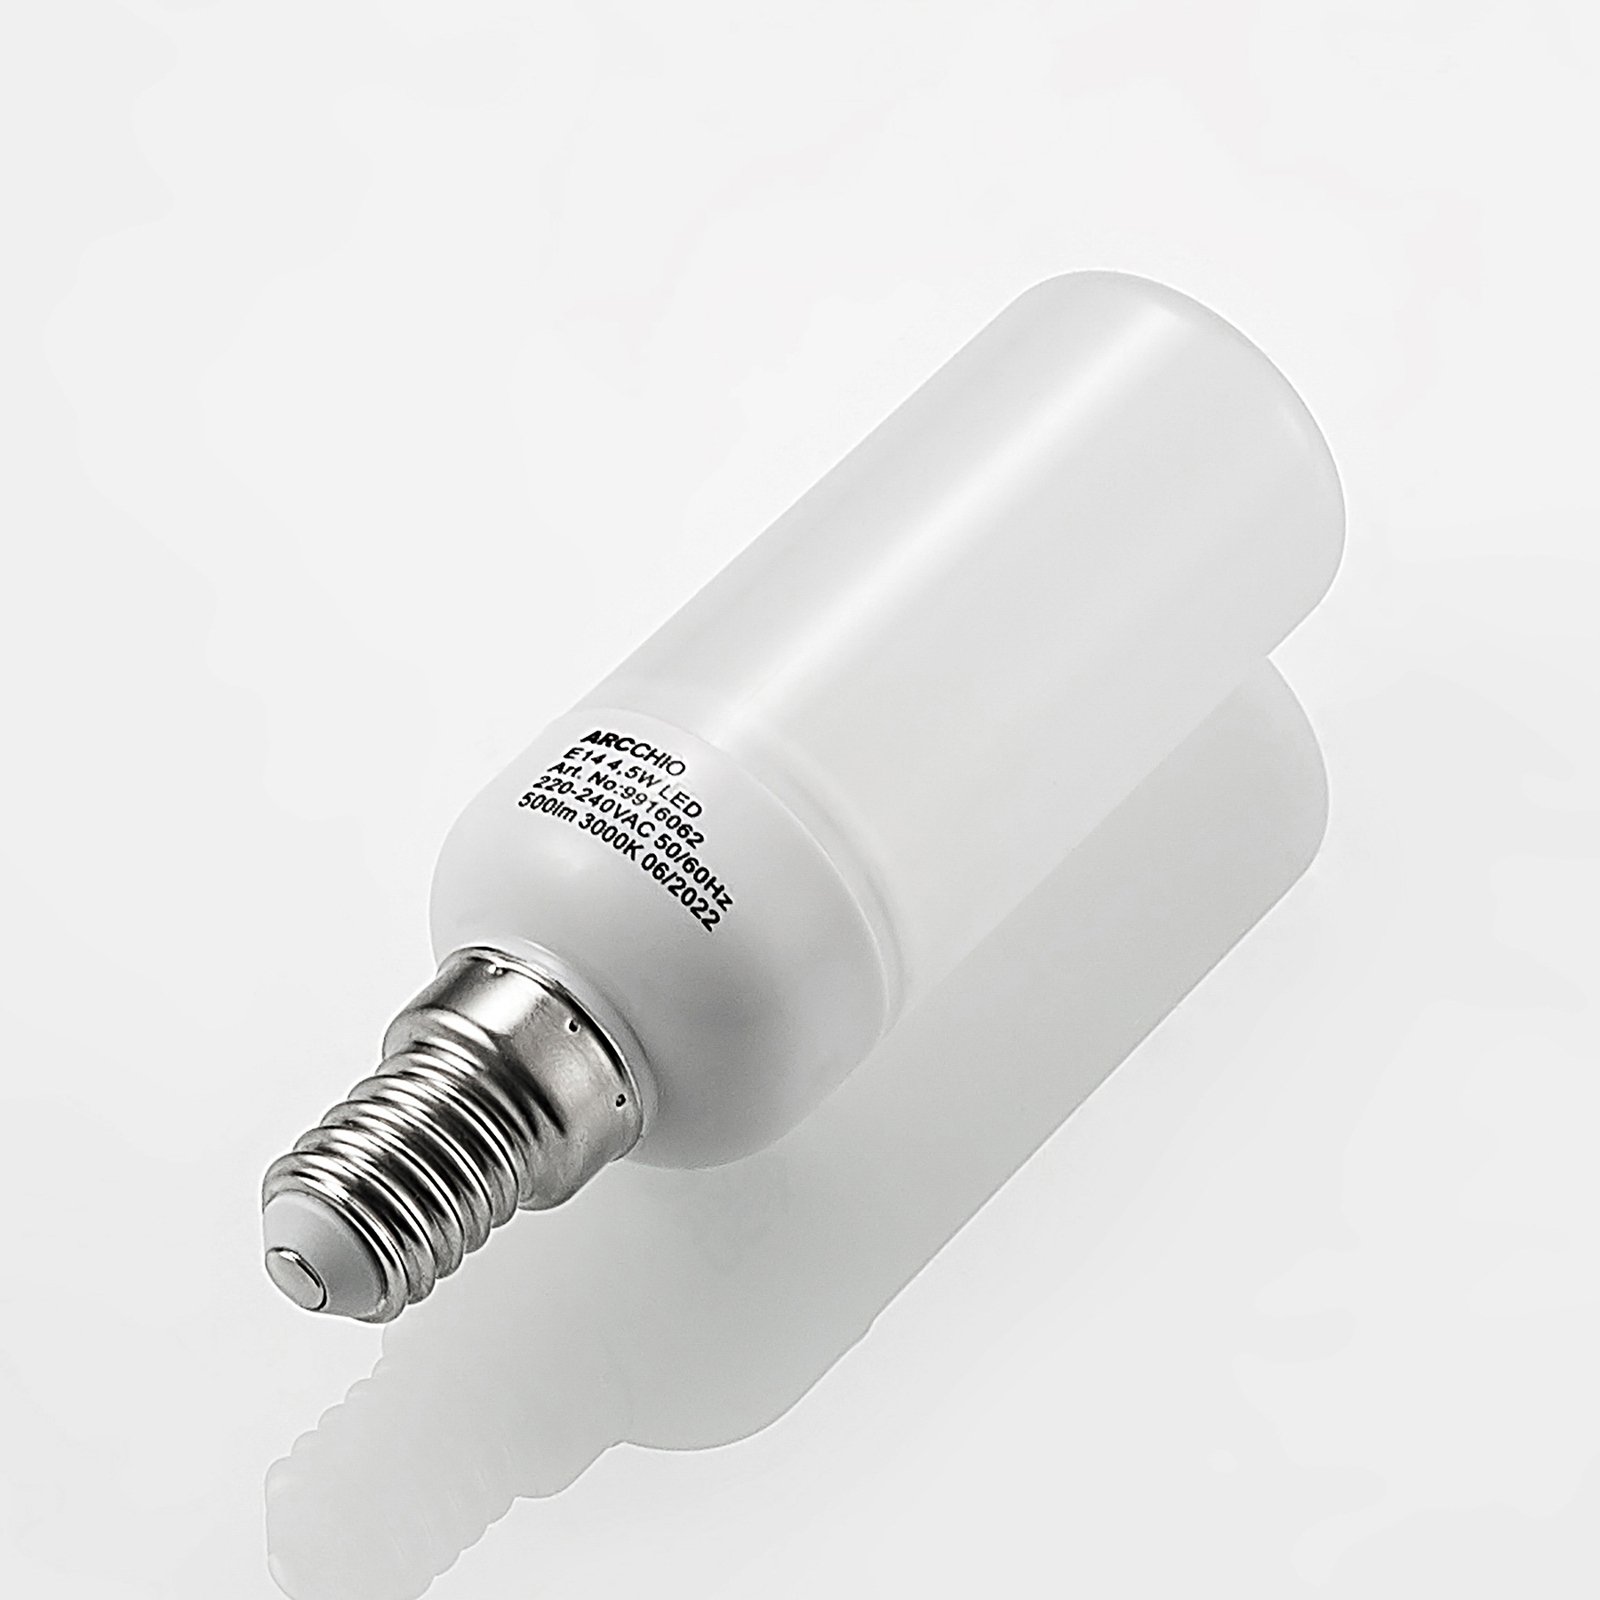 Arcchio LED lámpa cső alakú E14 4,5W 3000 K